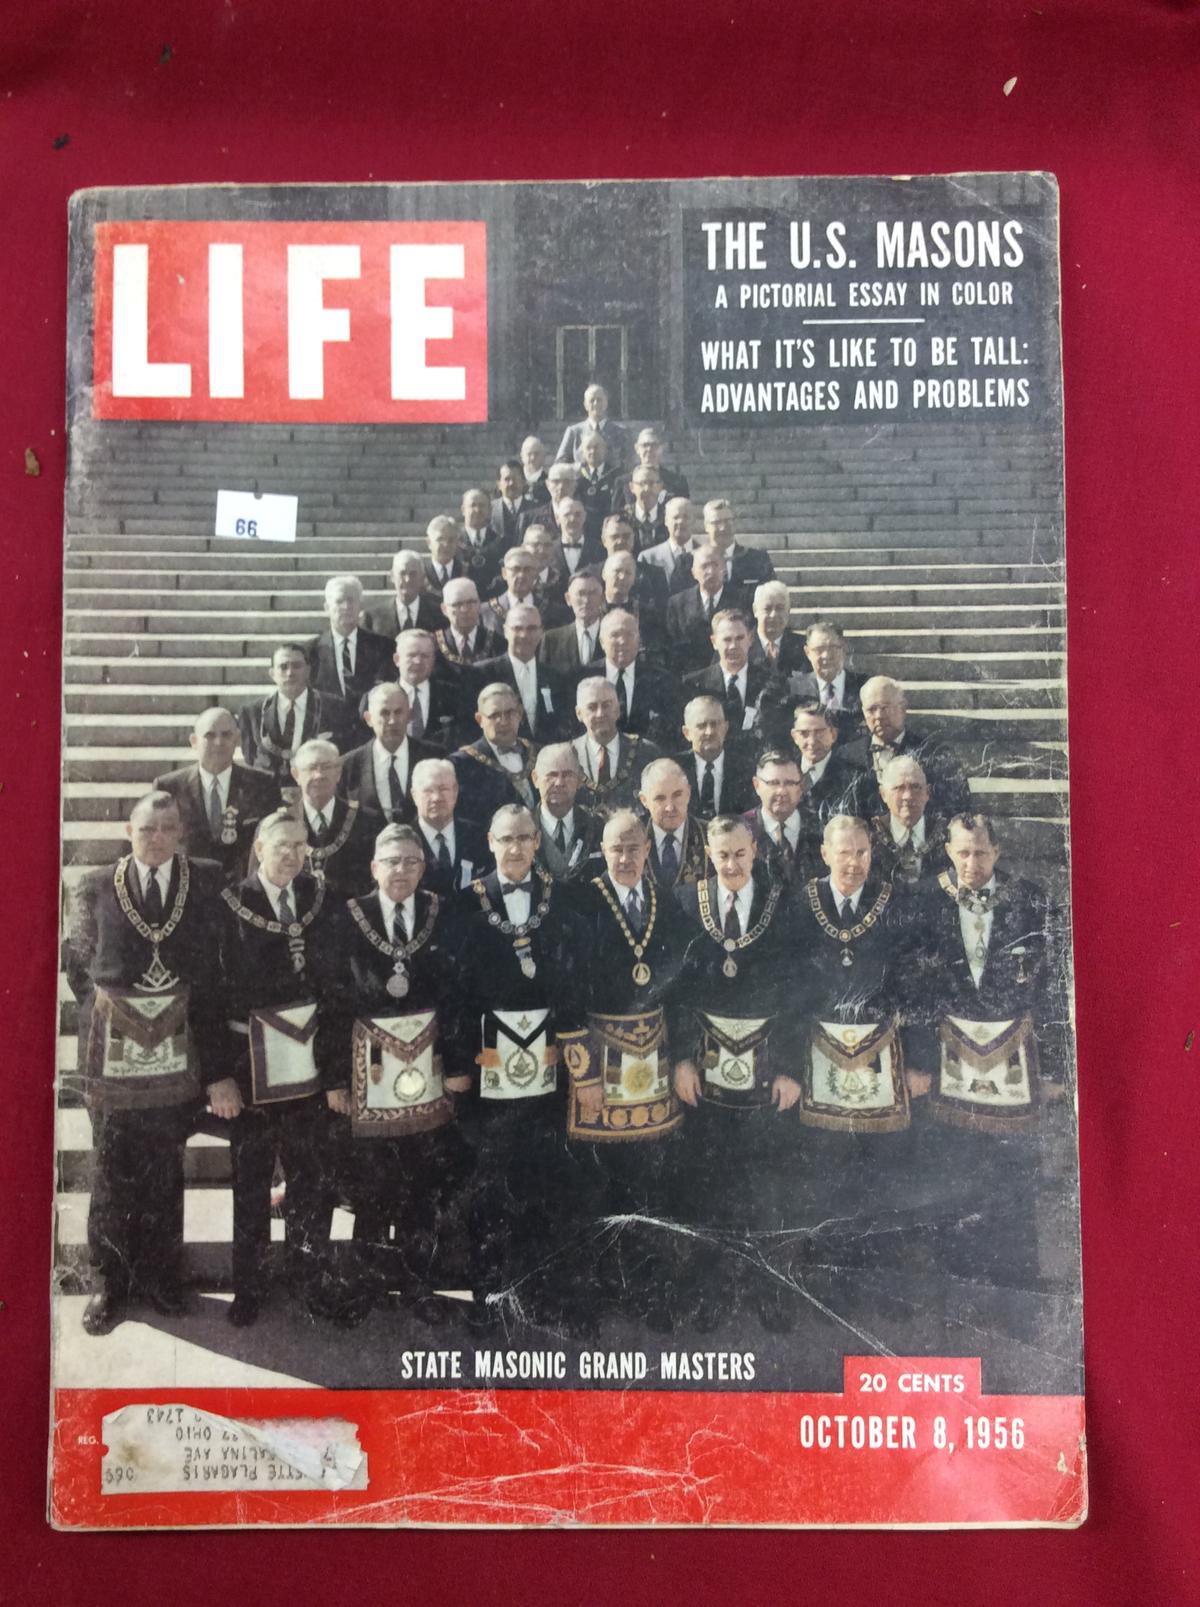 October 8, 1956 "LIFE, The U.S. Masons"